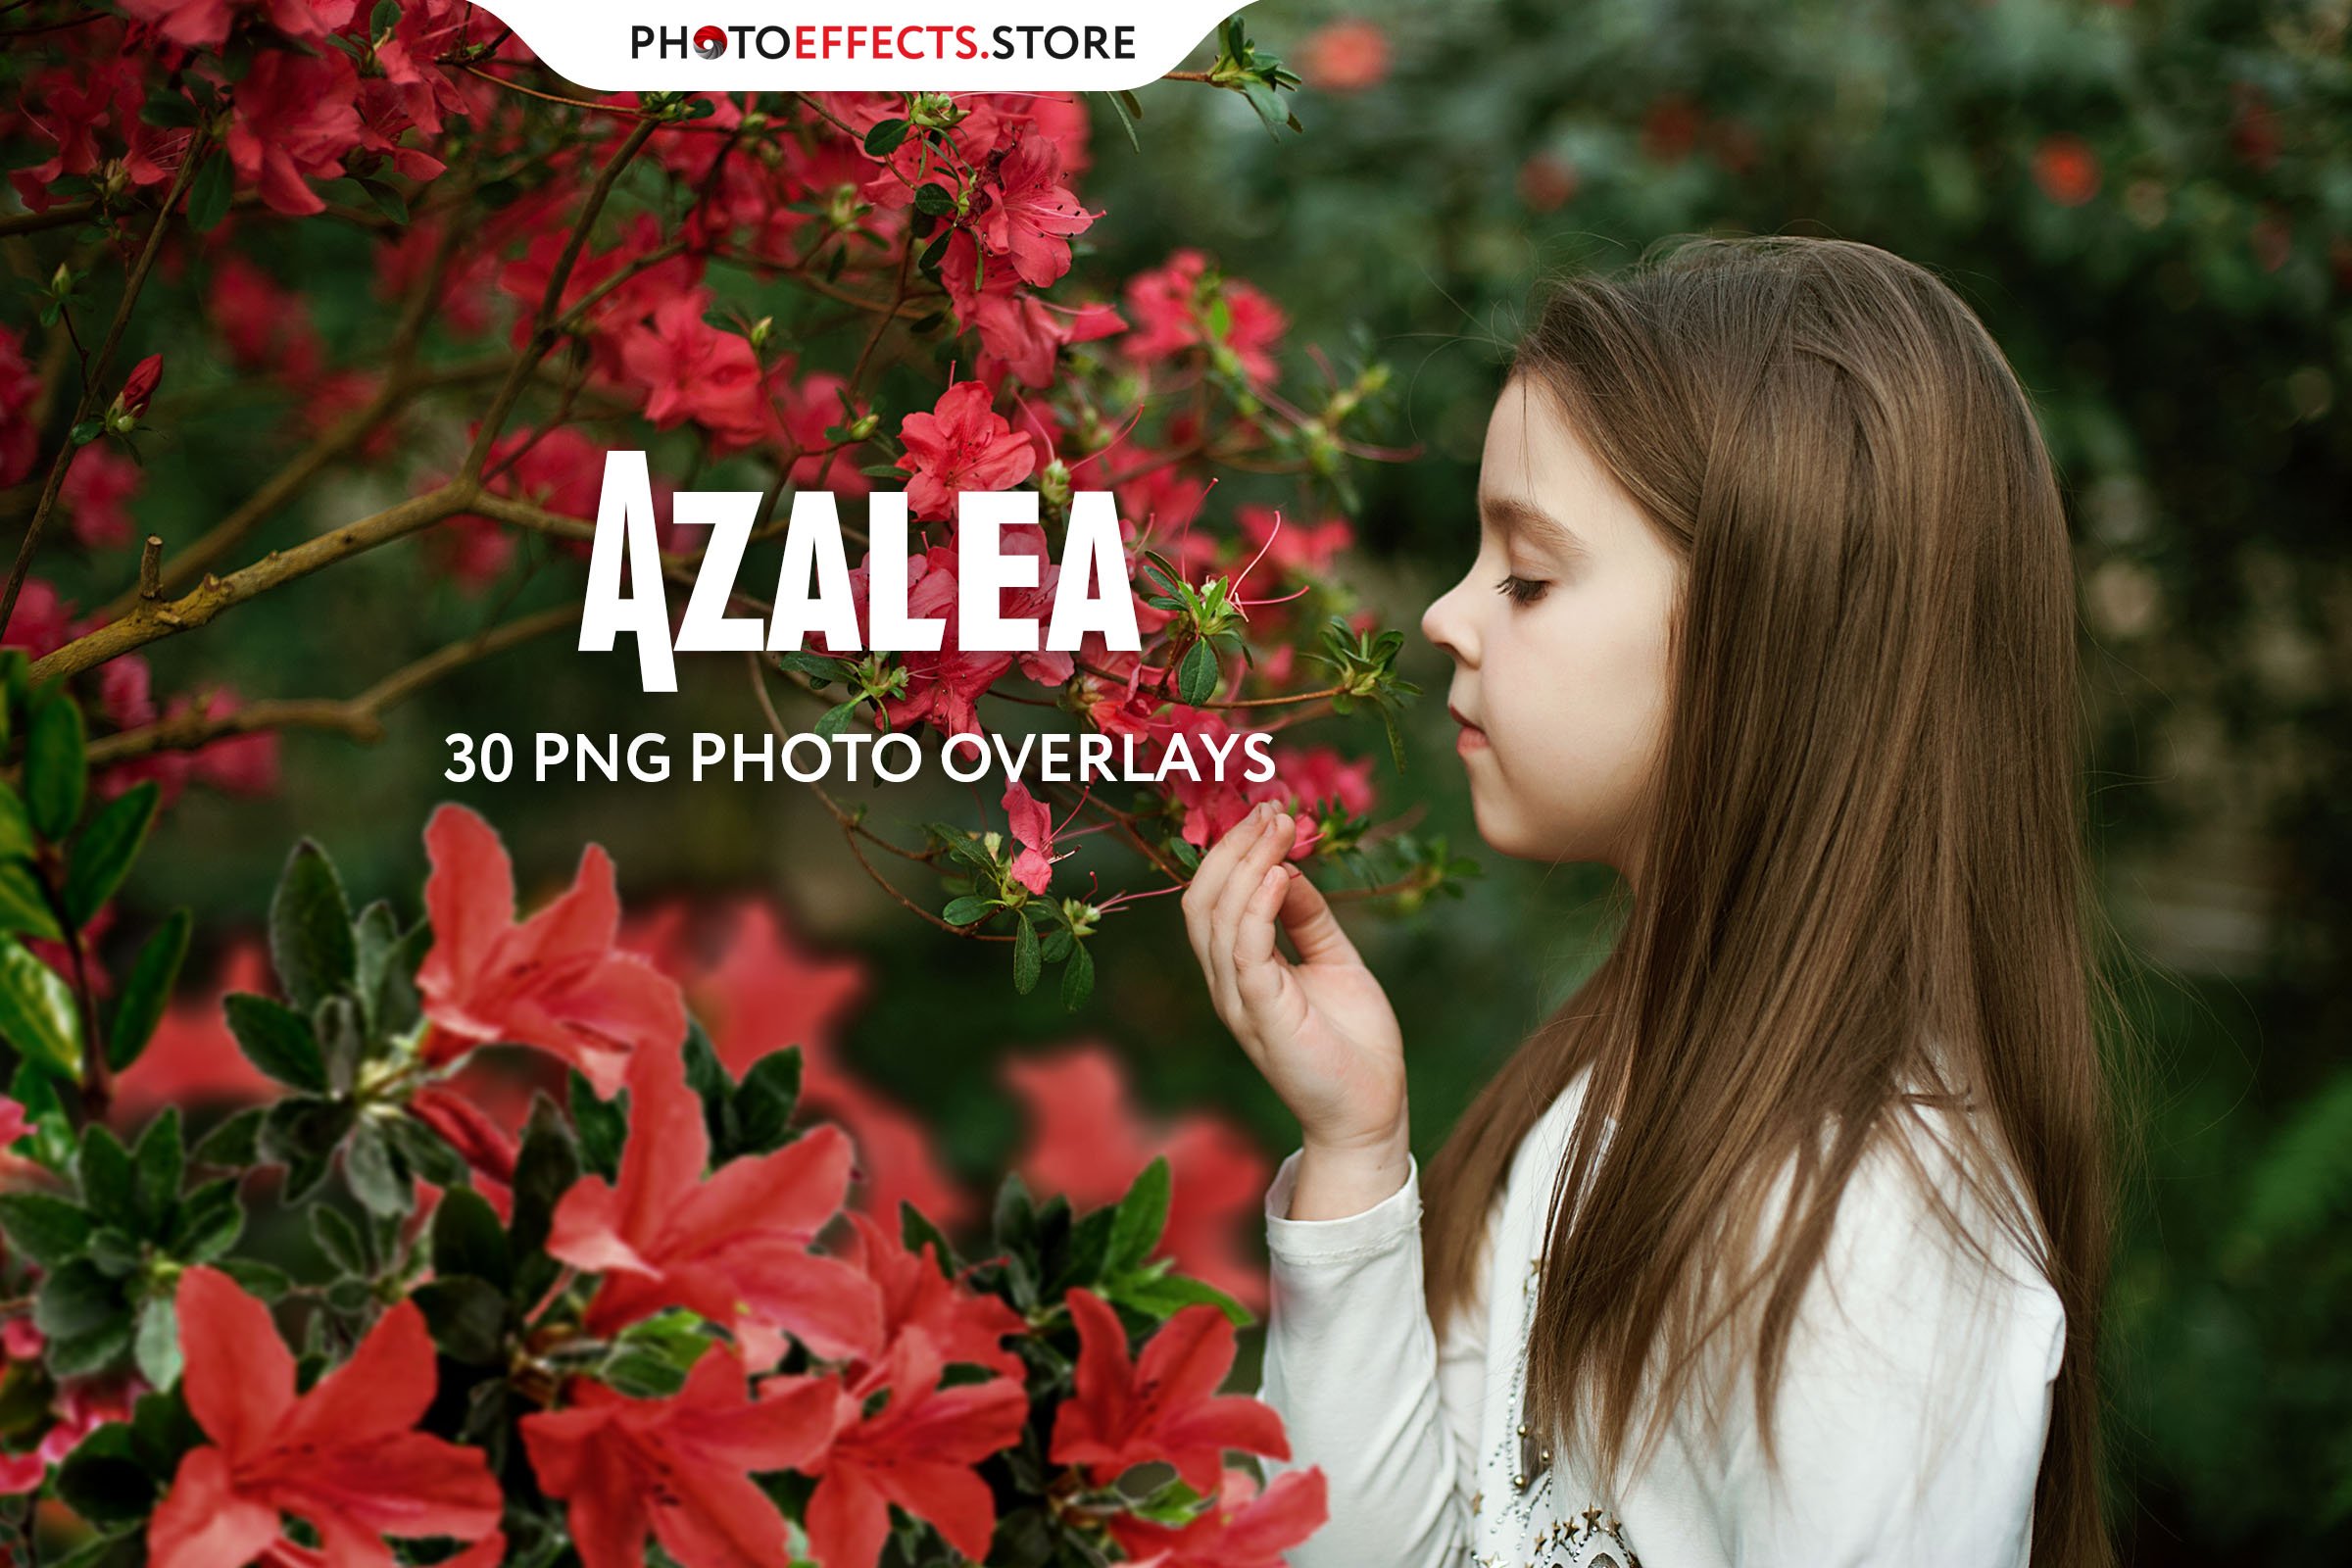 30 Azalea Photo Overlayscover image.